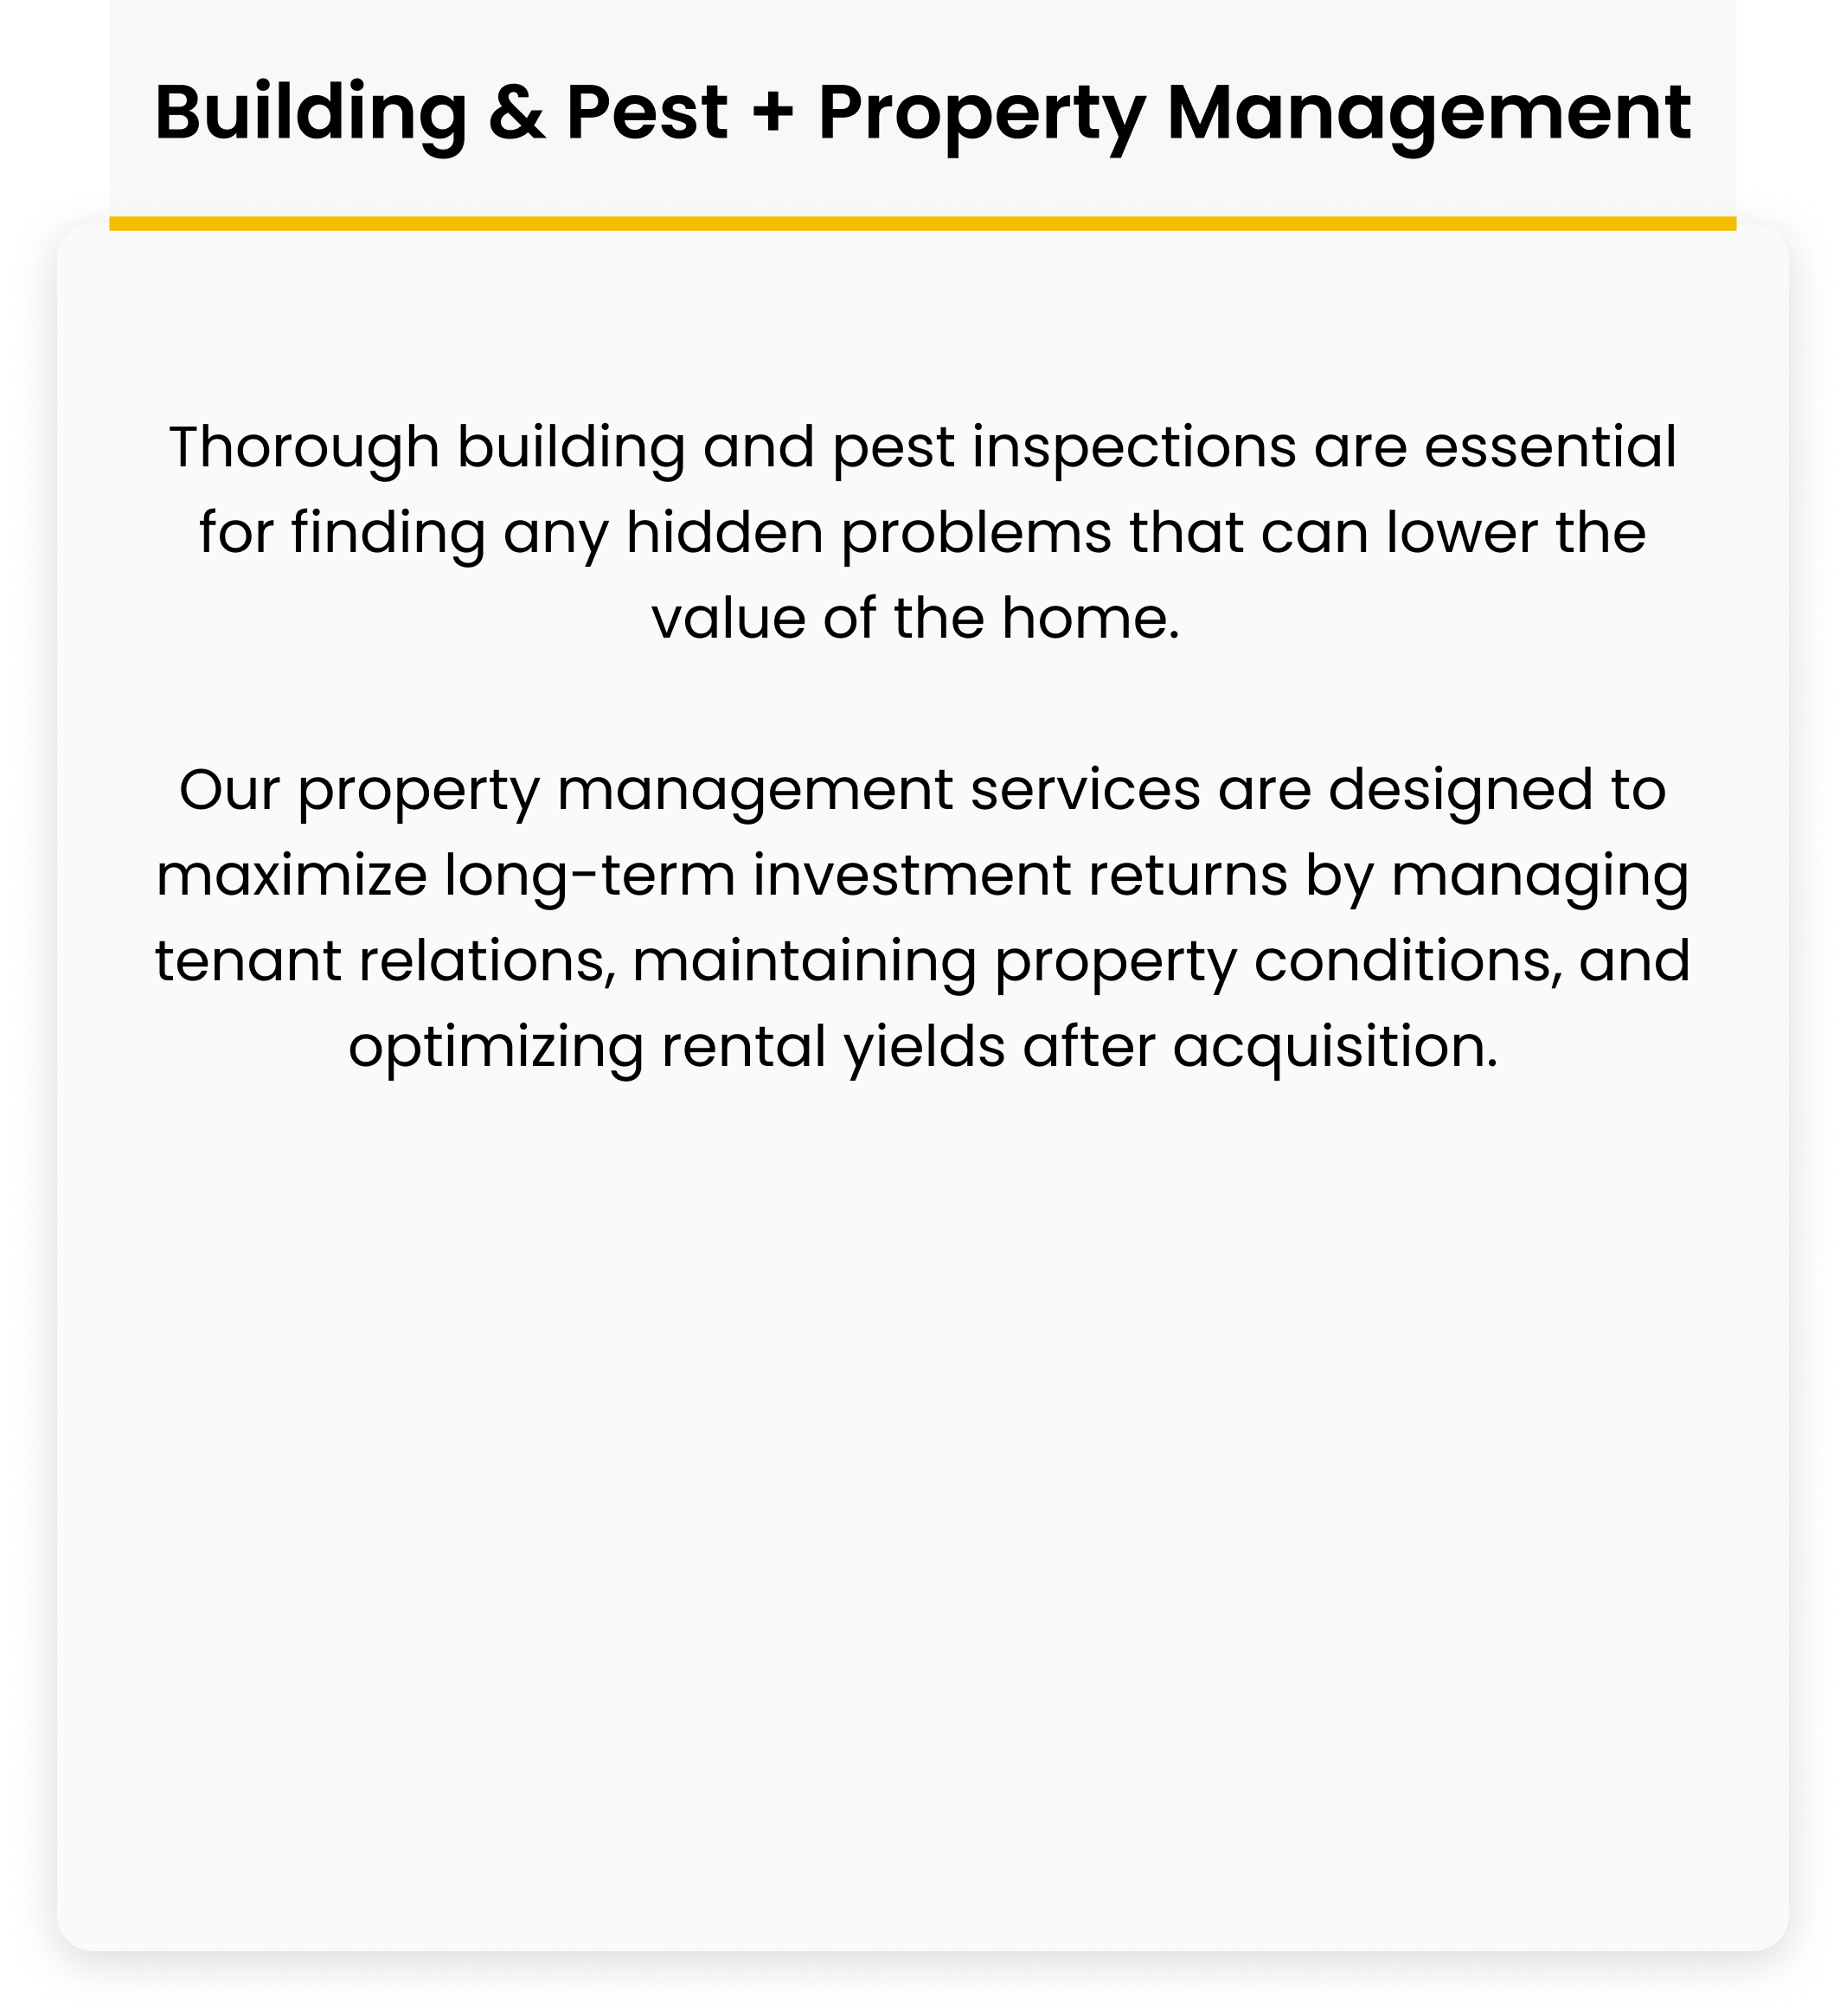 Building & Pest + Property Management